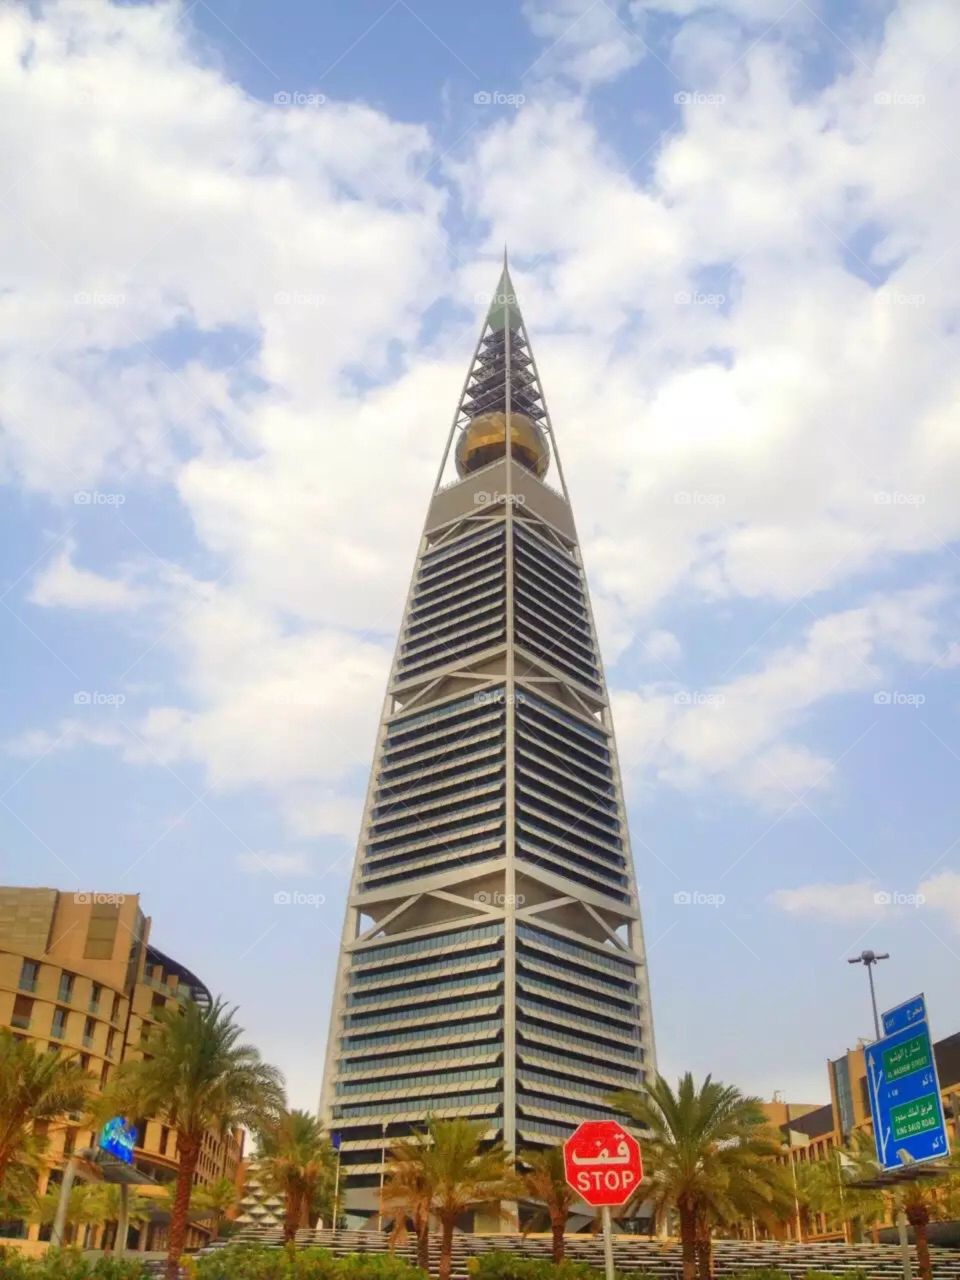 The Faisalyah Tower. Location: Riyadh, Saudi Arabia